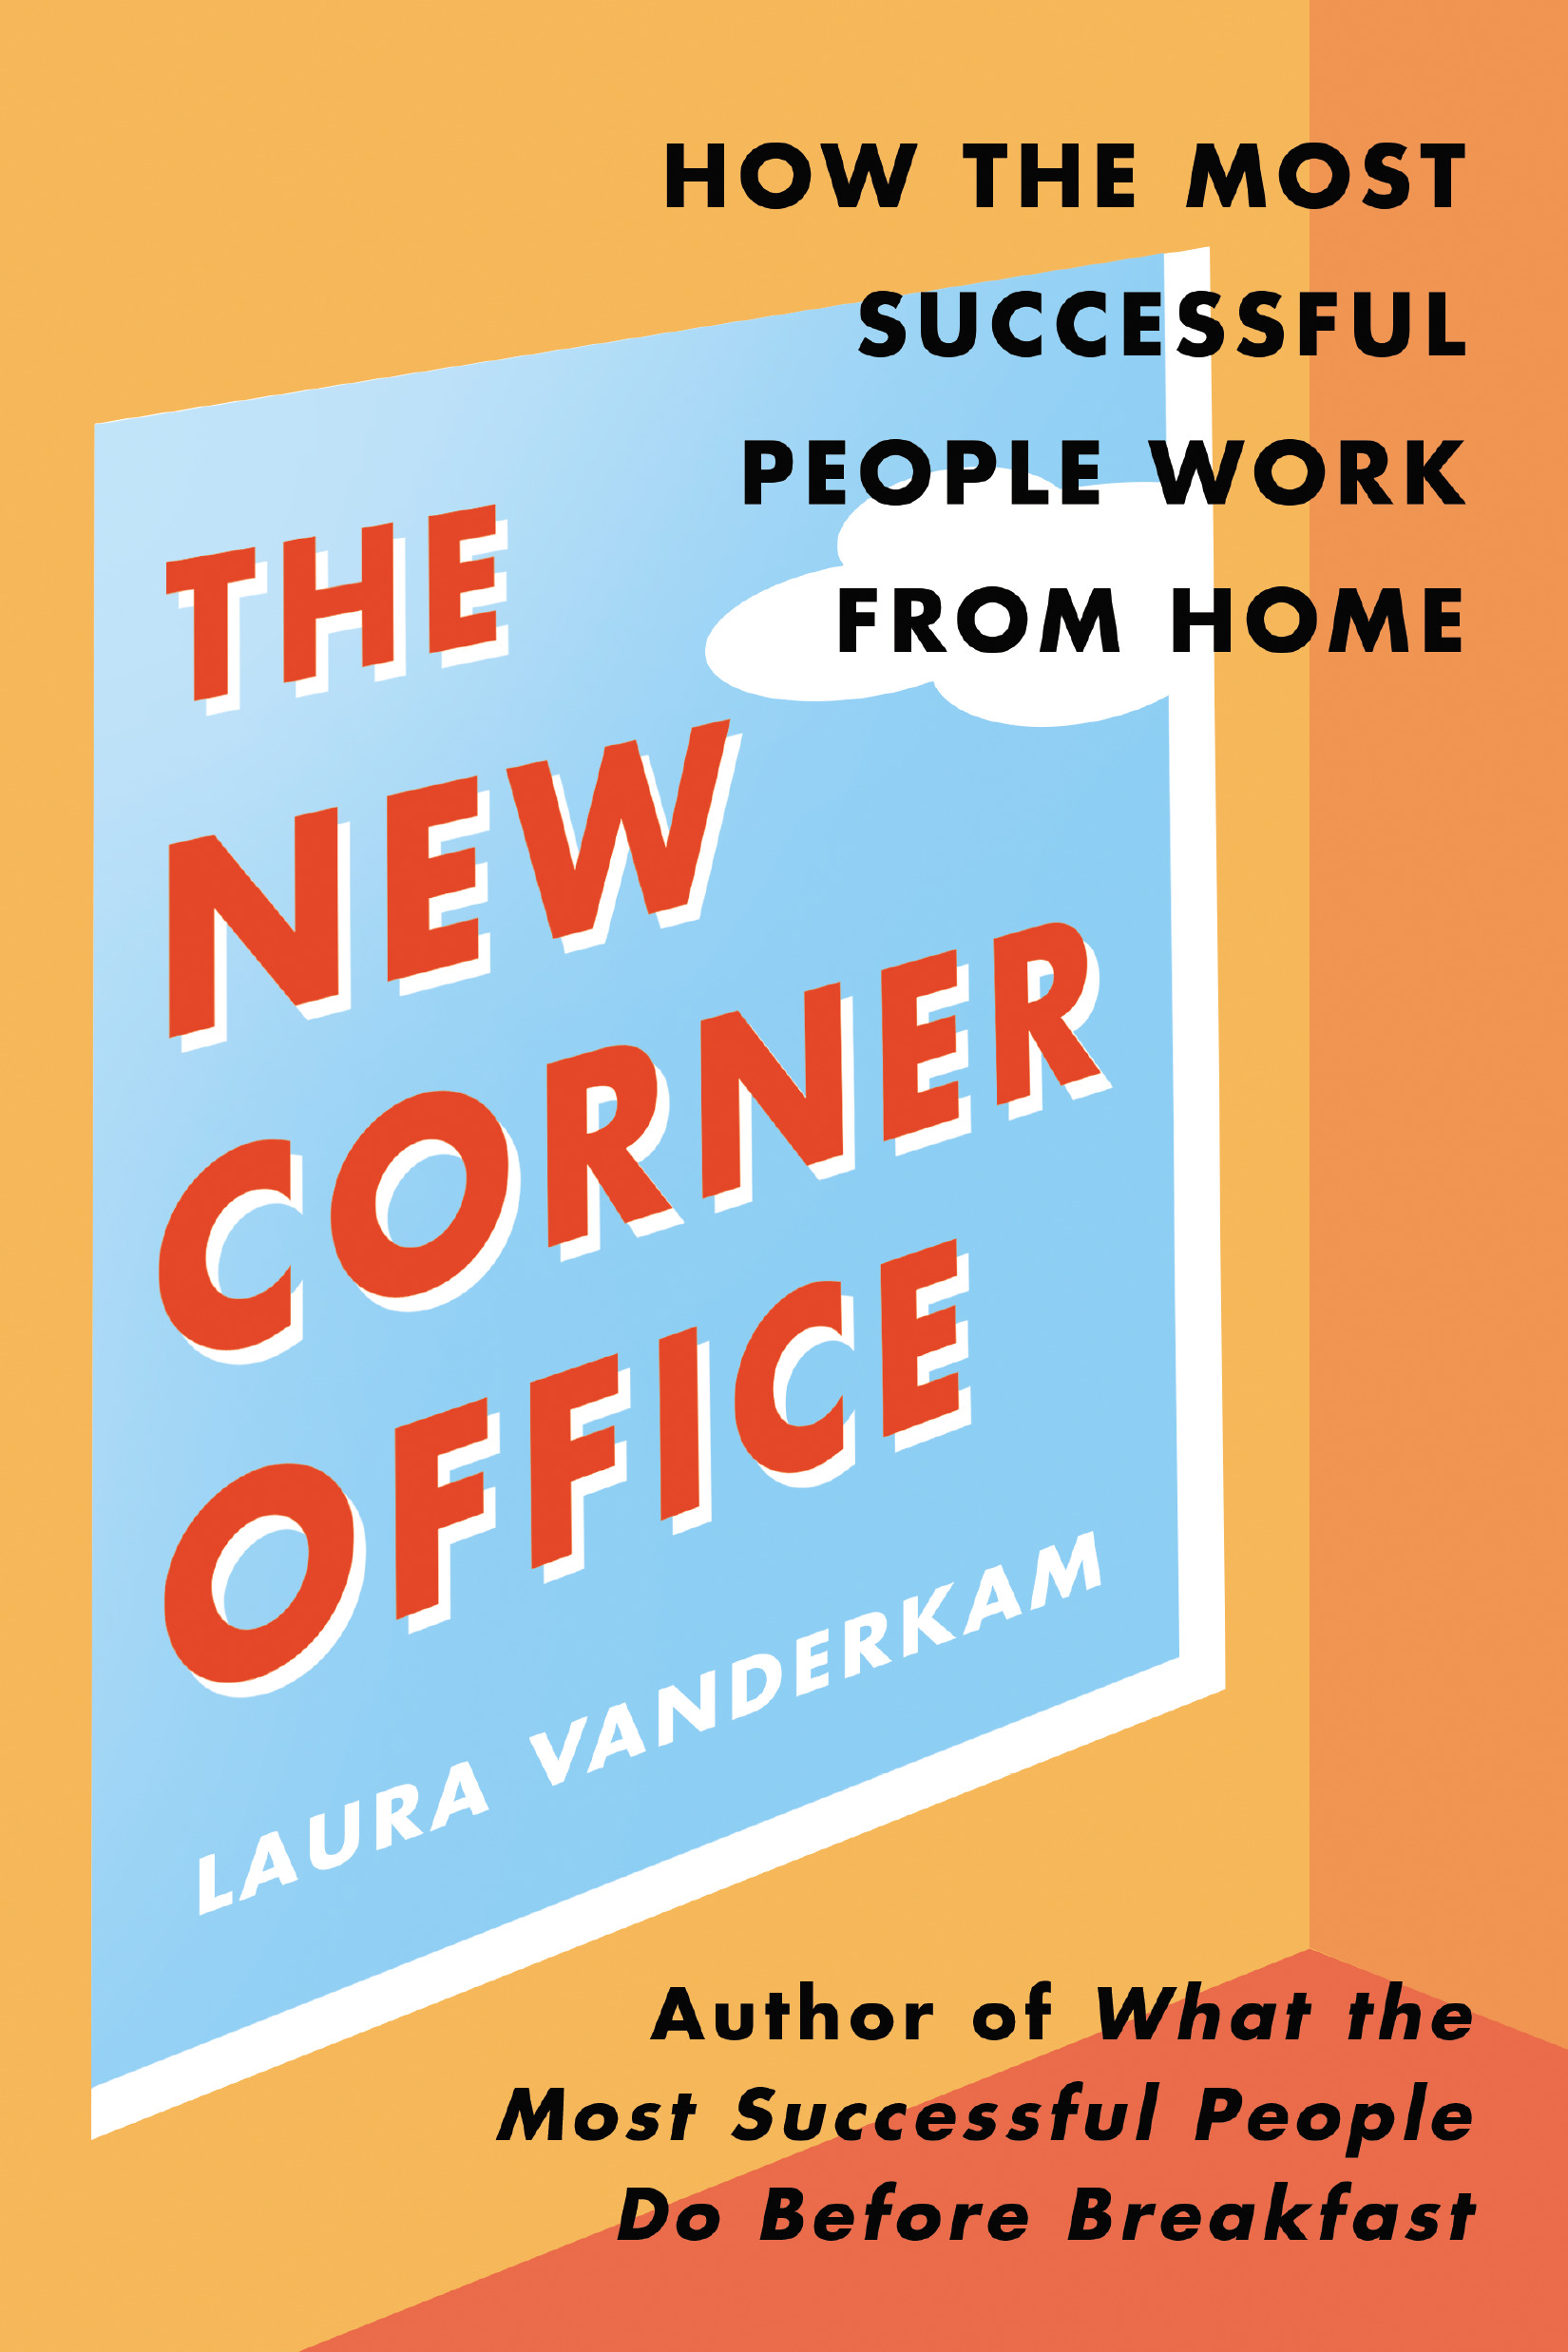 https://lauravanderkam.com/wp-content/uploads/2020/06/The-New-Corner-Office-by-Laura-Vanderkam.jpg